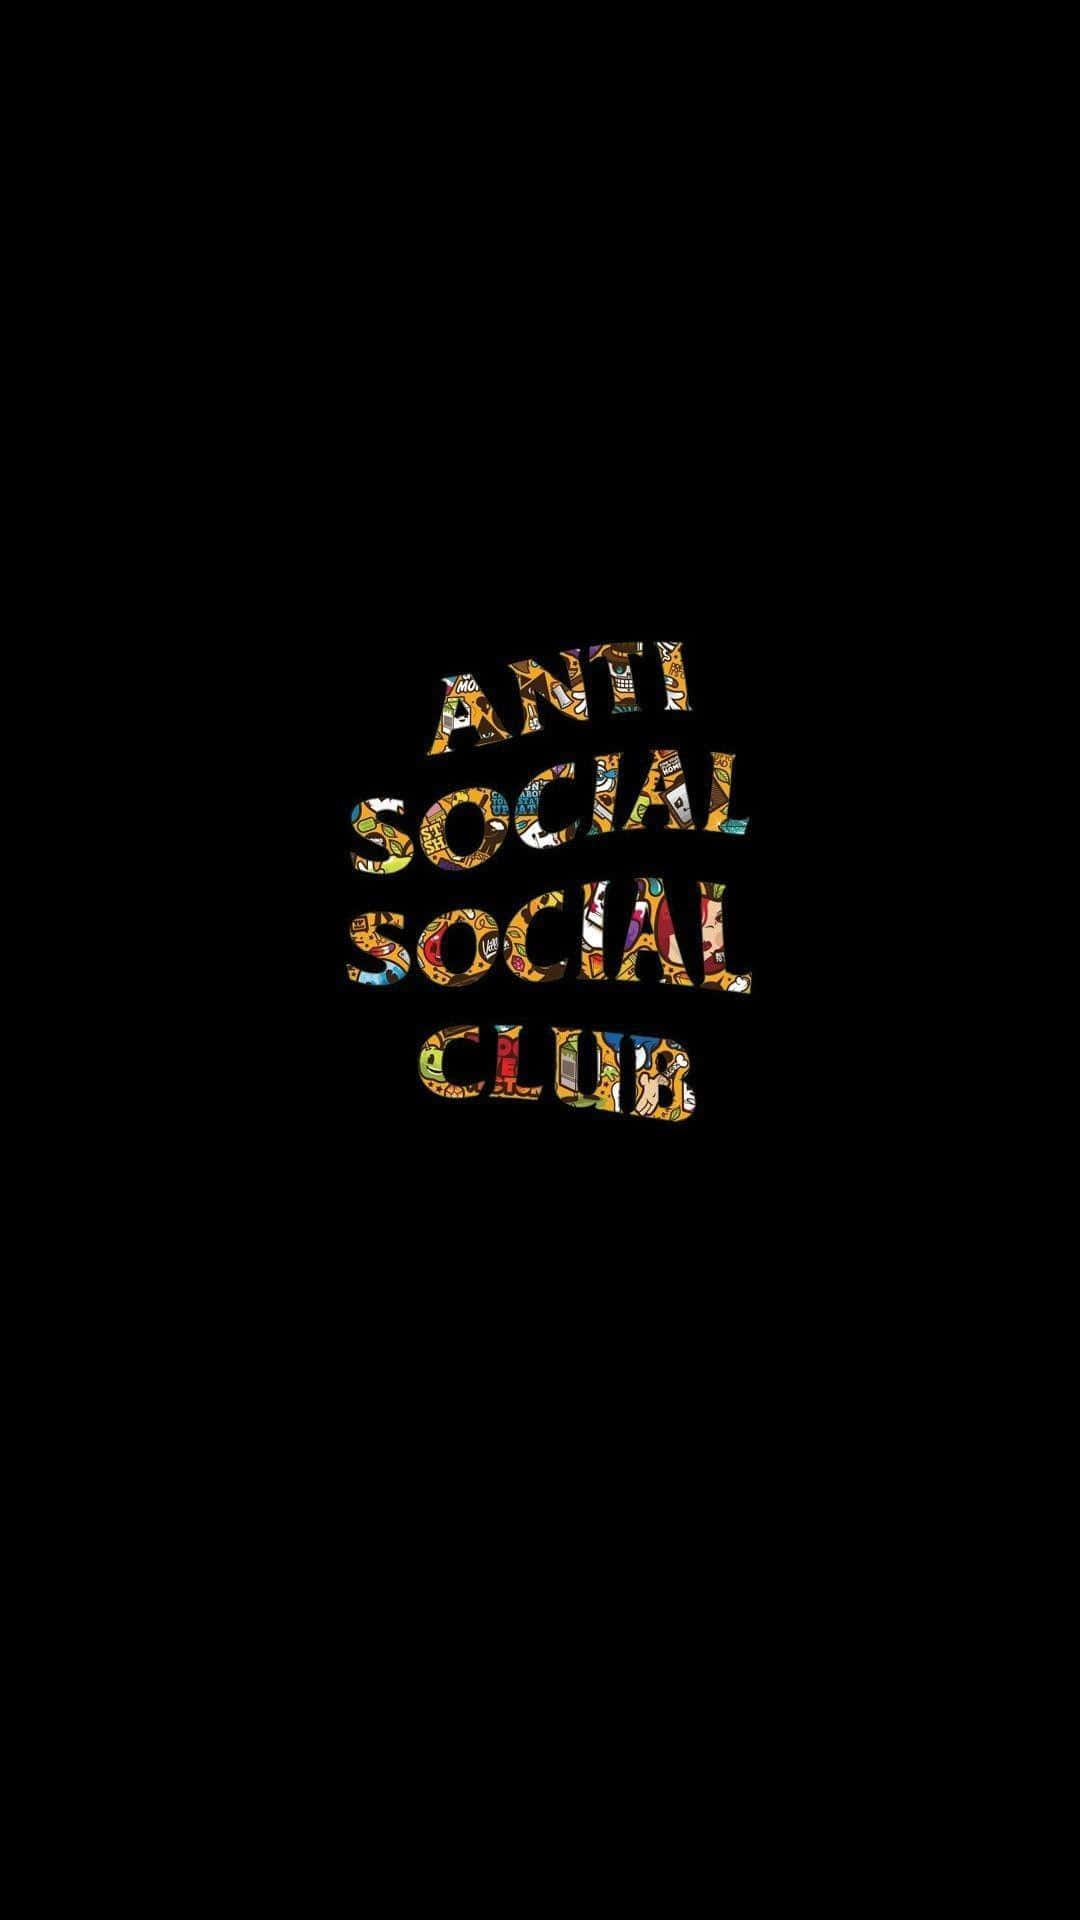 Doodles On Anti Social Club Iphone Wallpaper